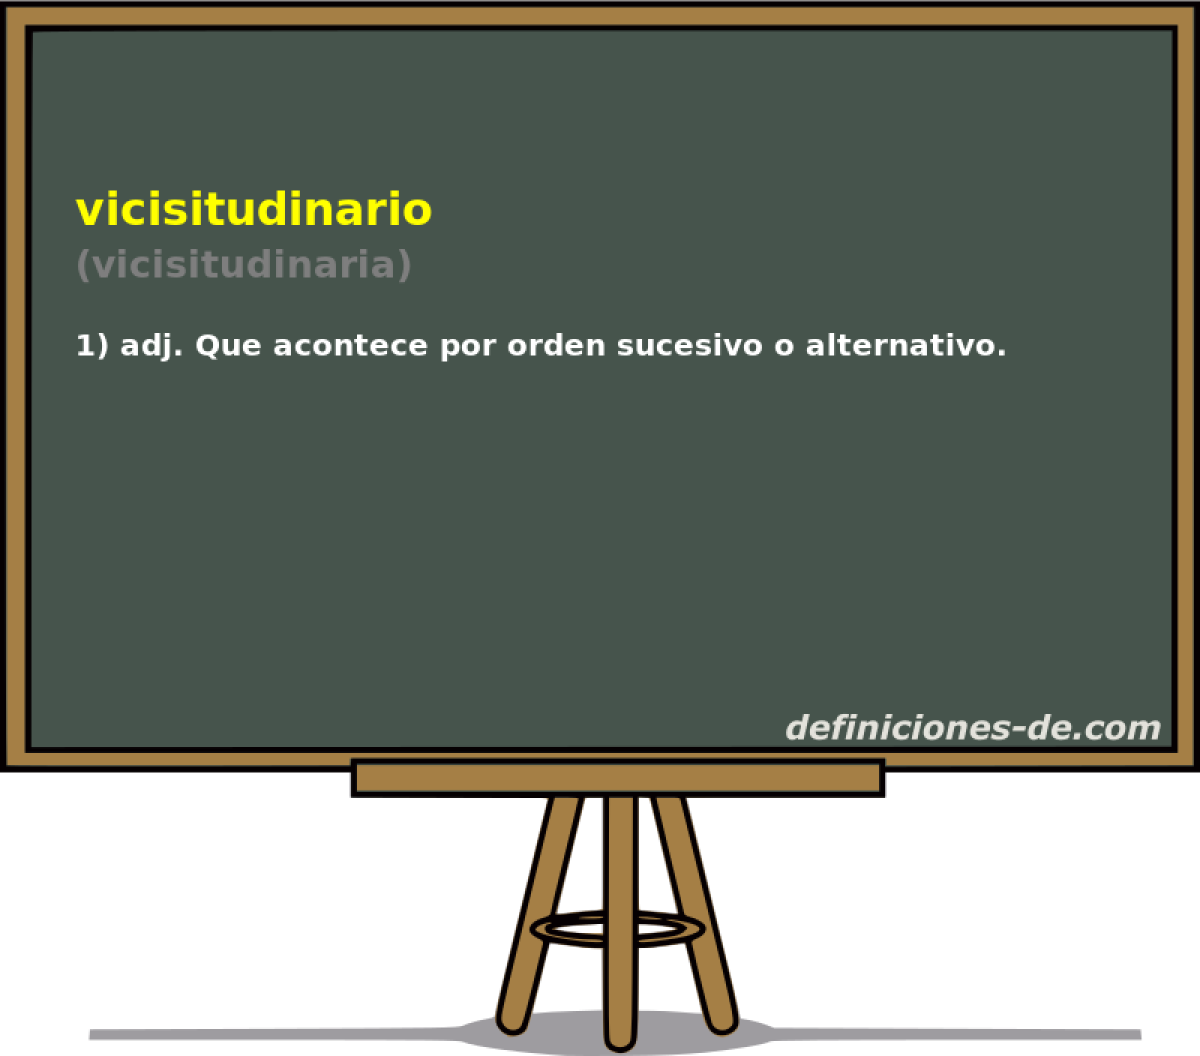 vicisitudinario (vicisitudinaria)